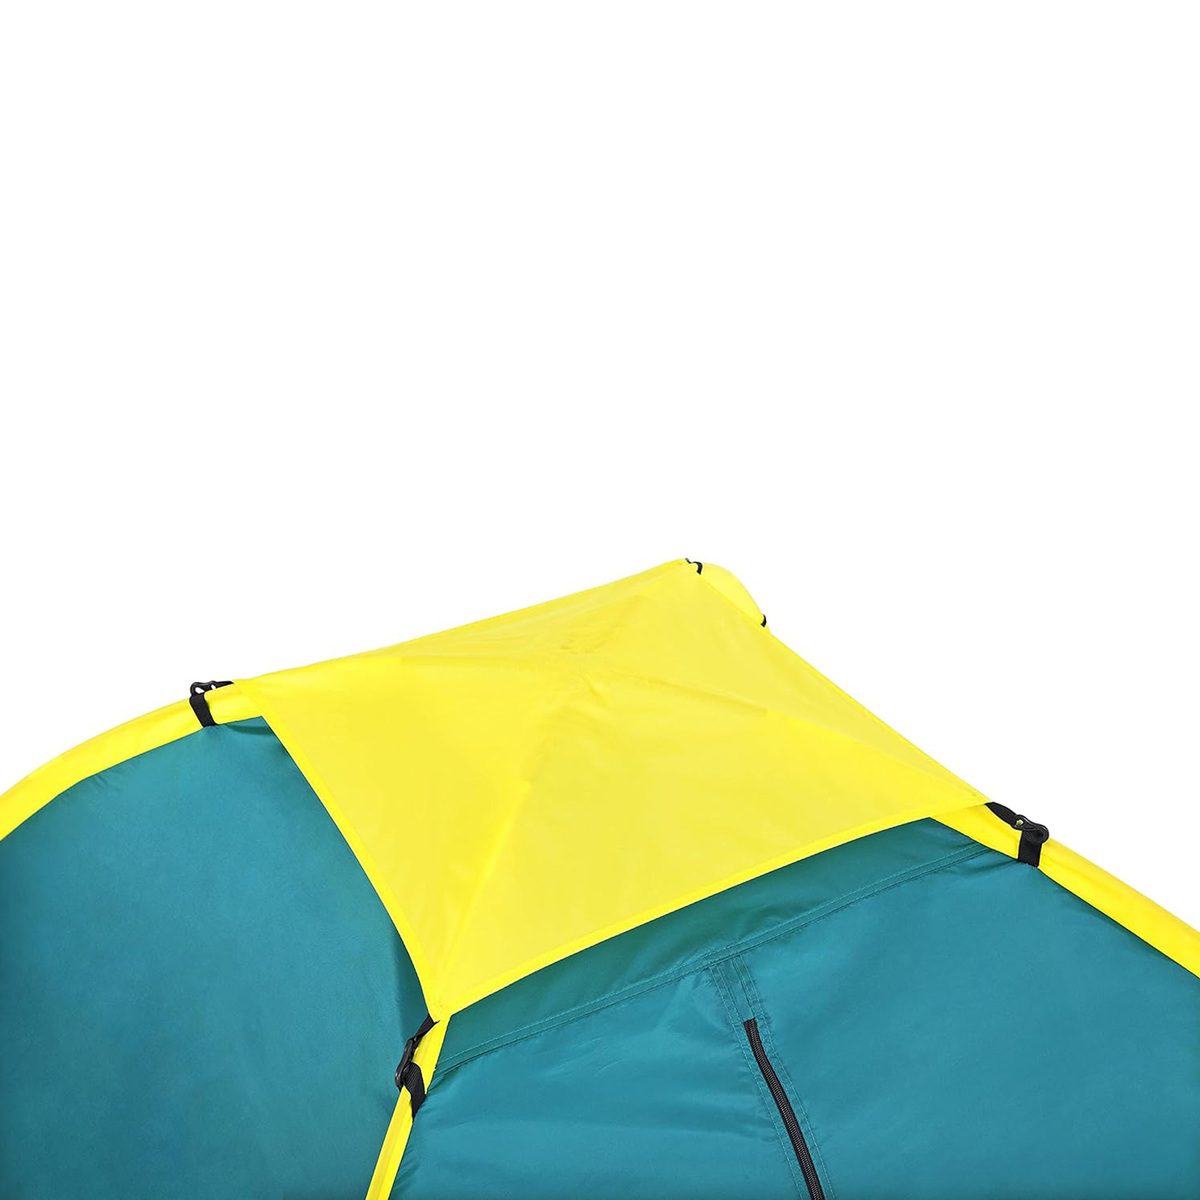 Best Way Pavillo Cooldome 3 Person Tent, 210 x 210 x 130 cm, 68085